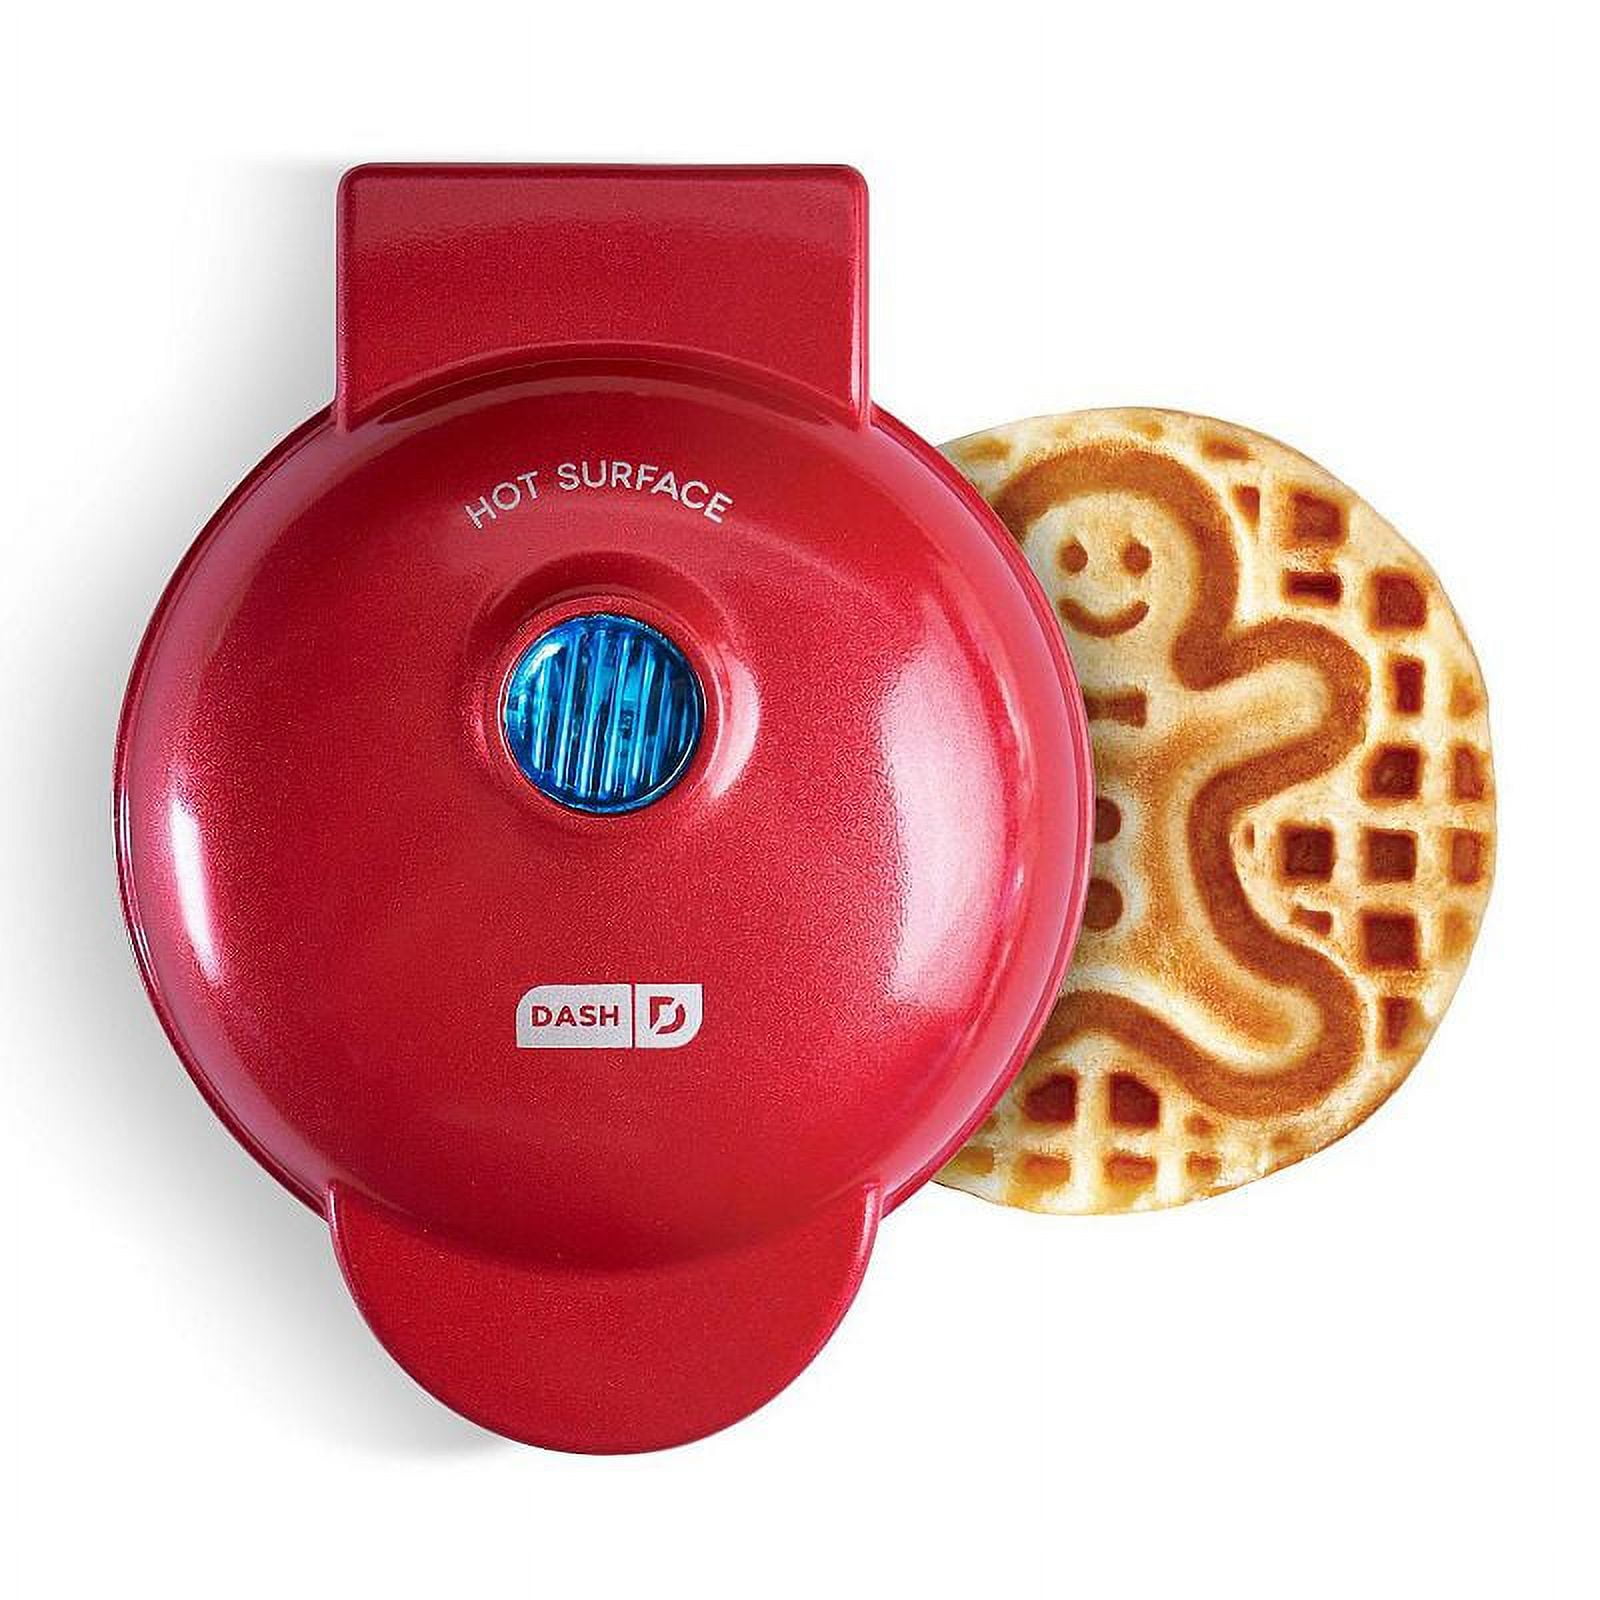 Gingerbread Man Waffles